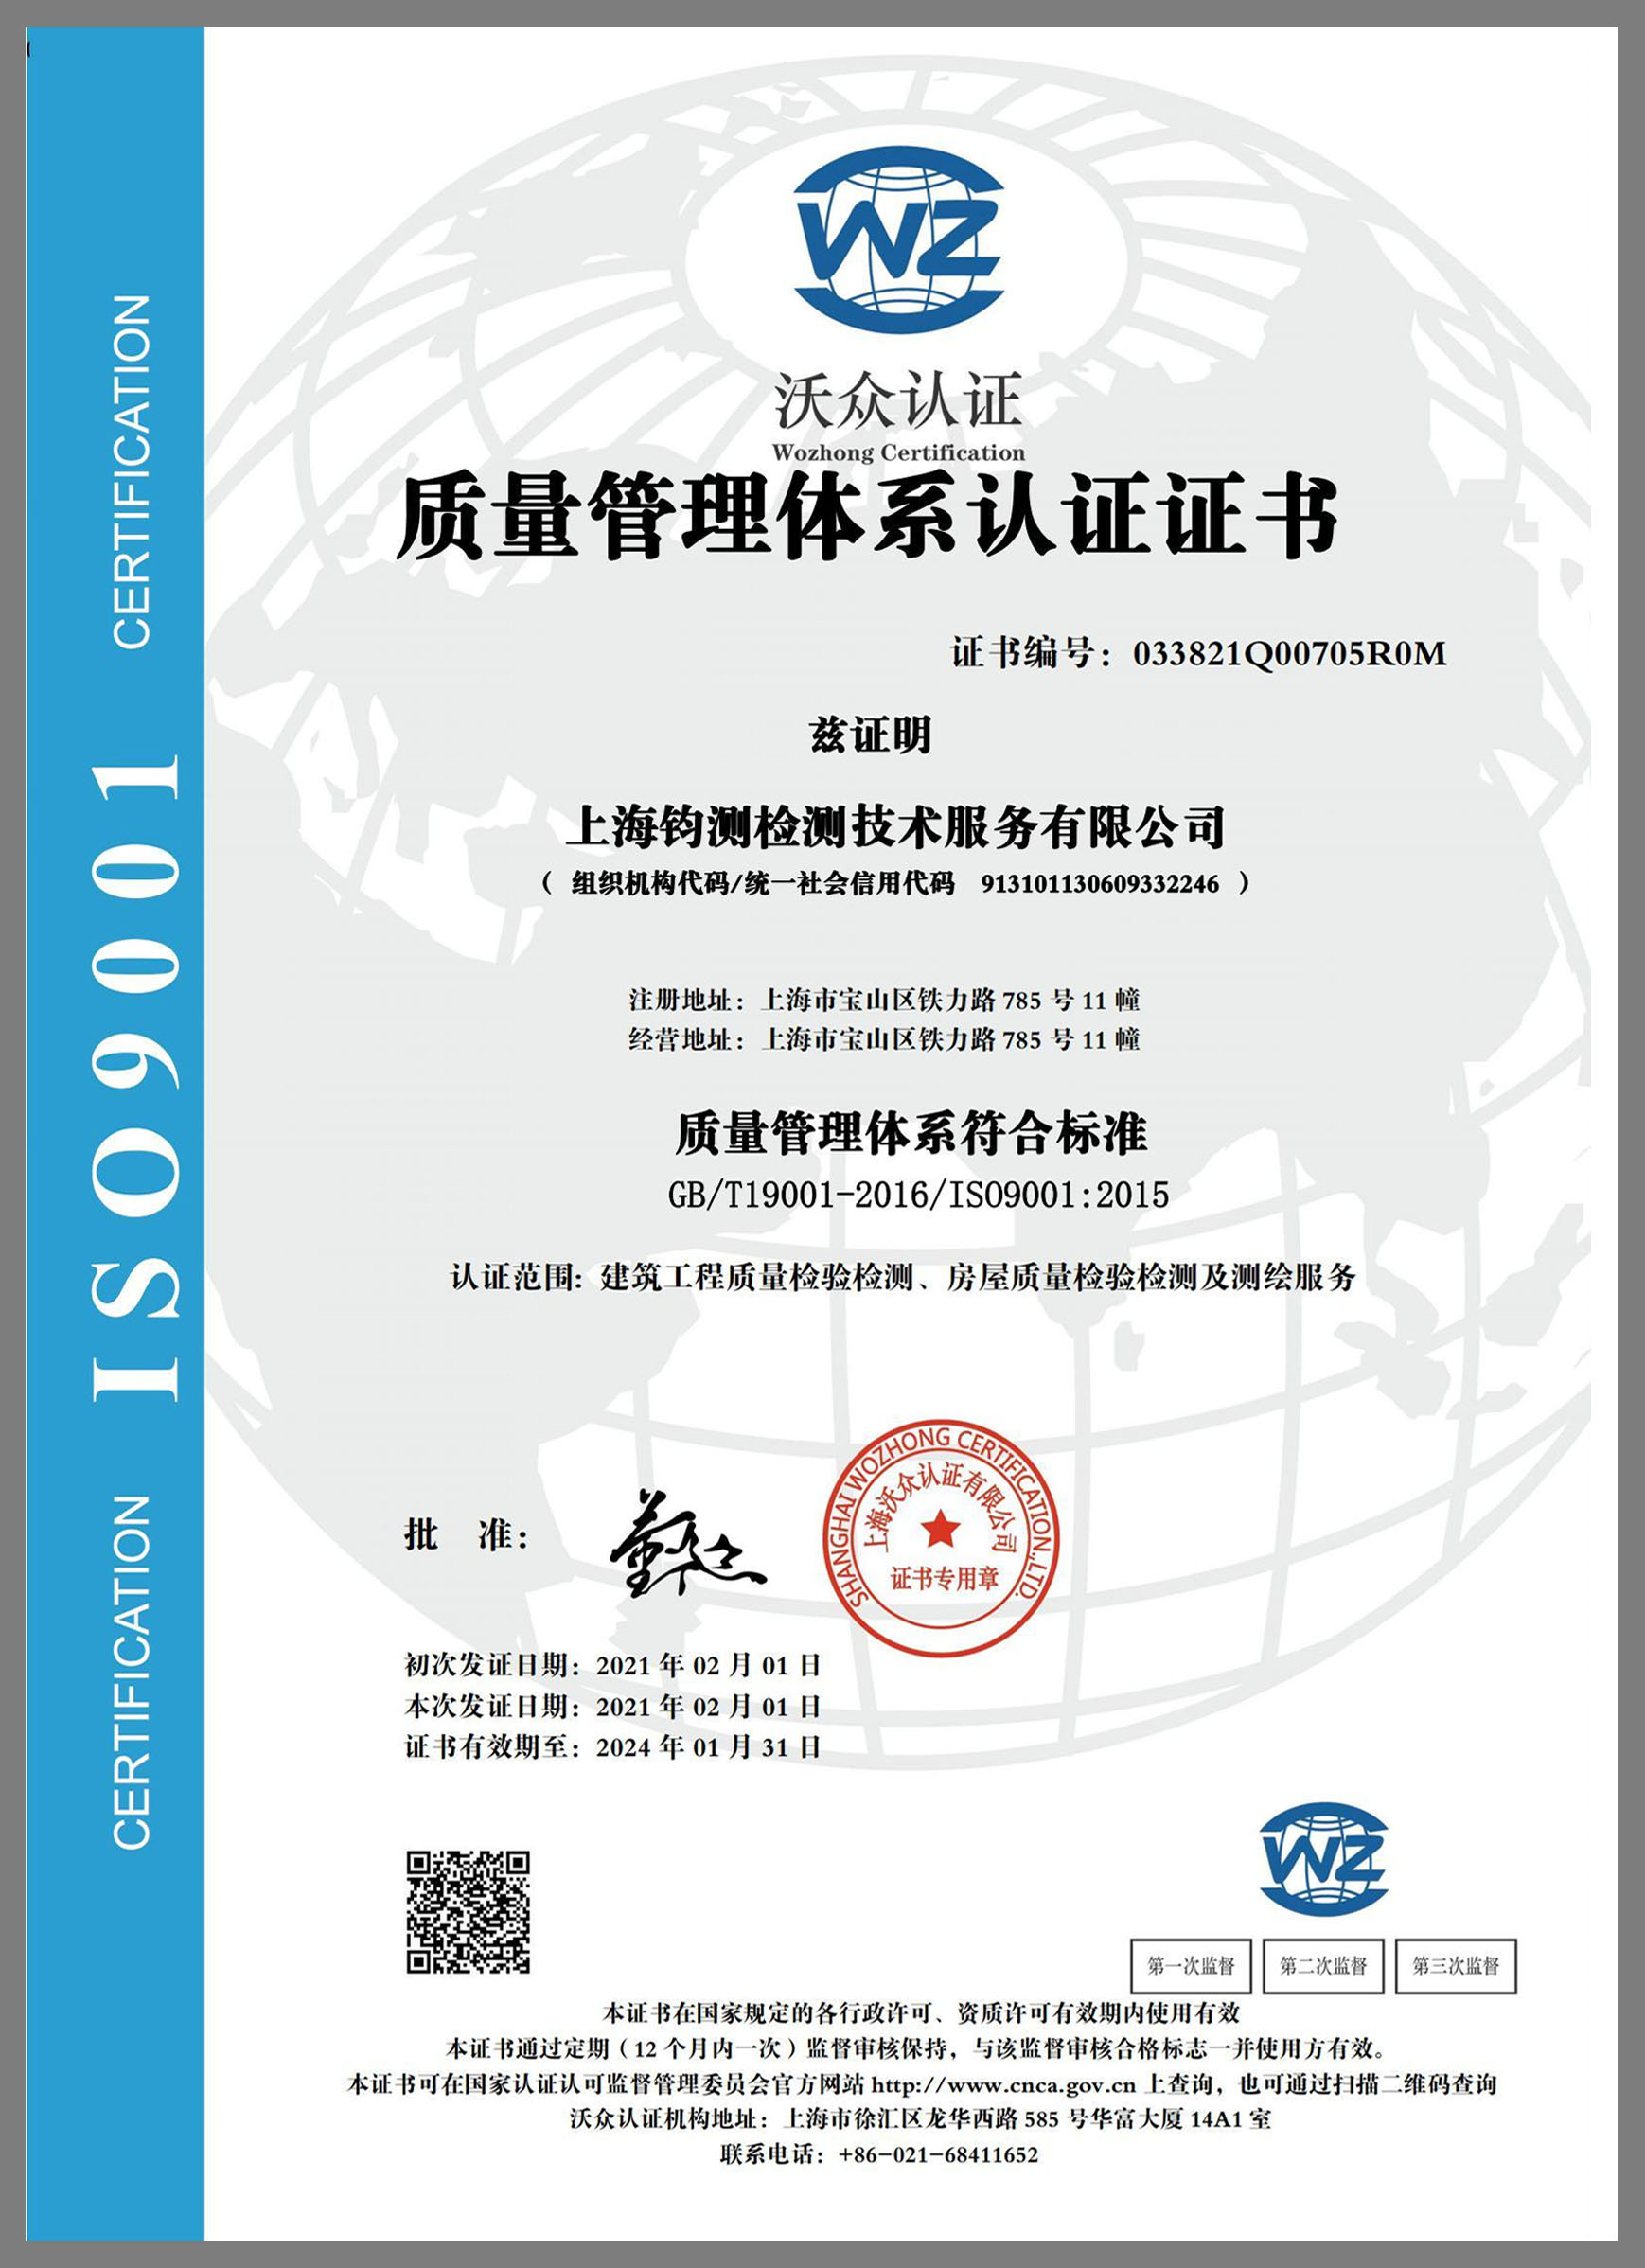 ios9001质量关系体系证书